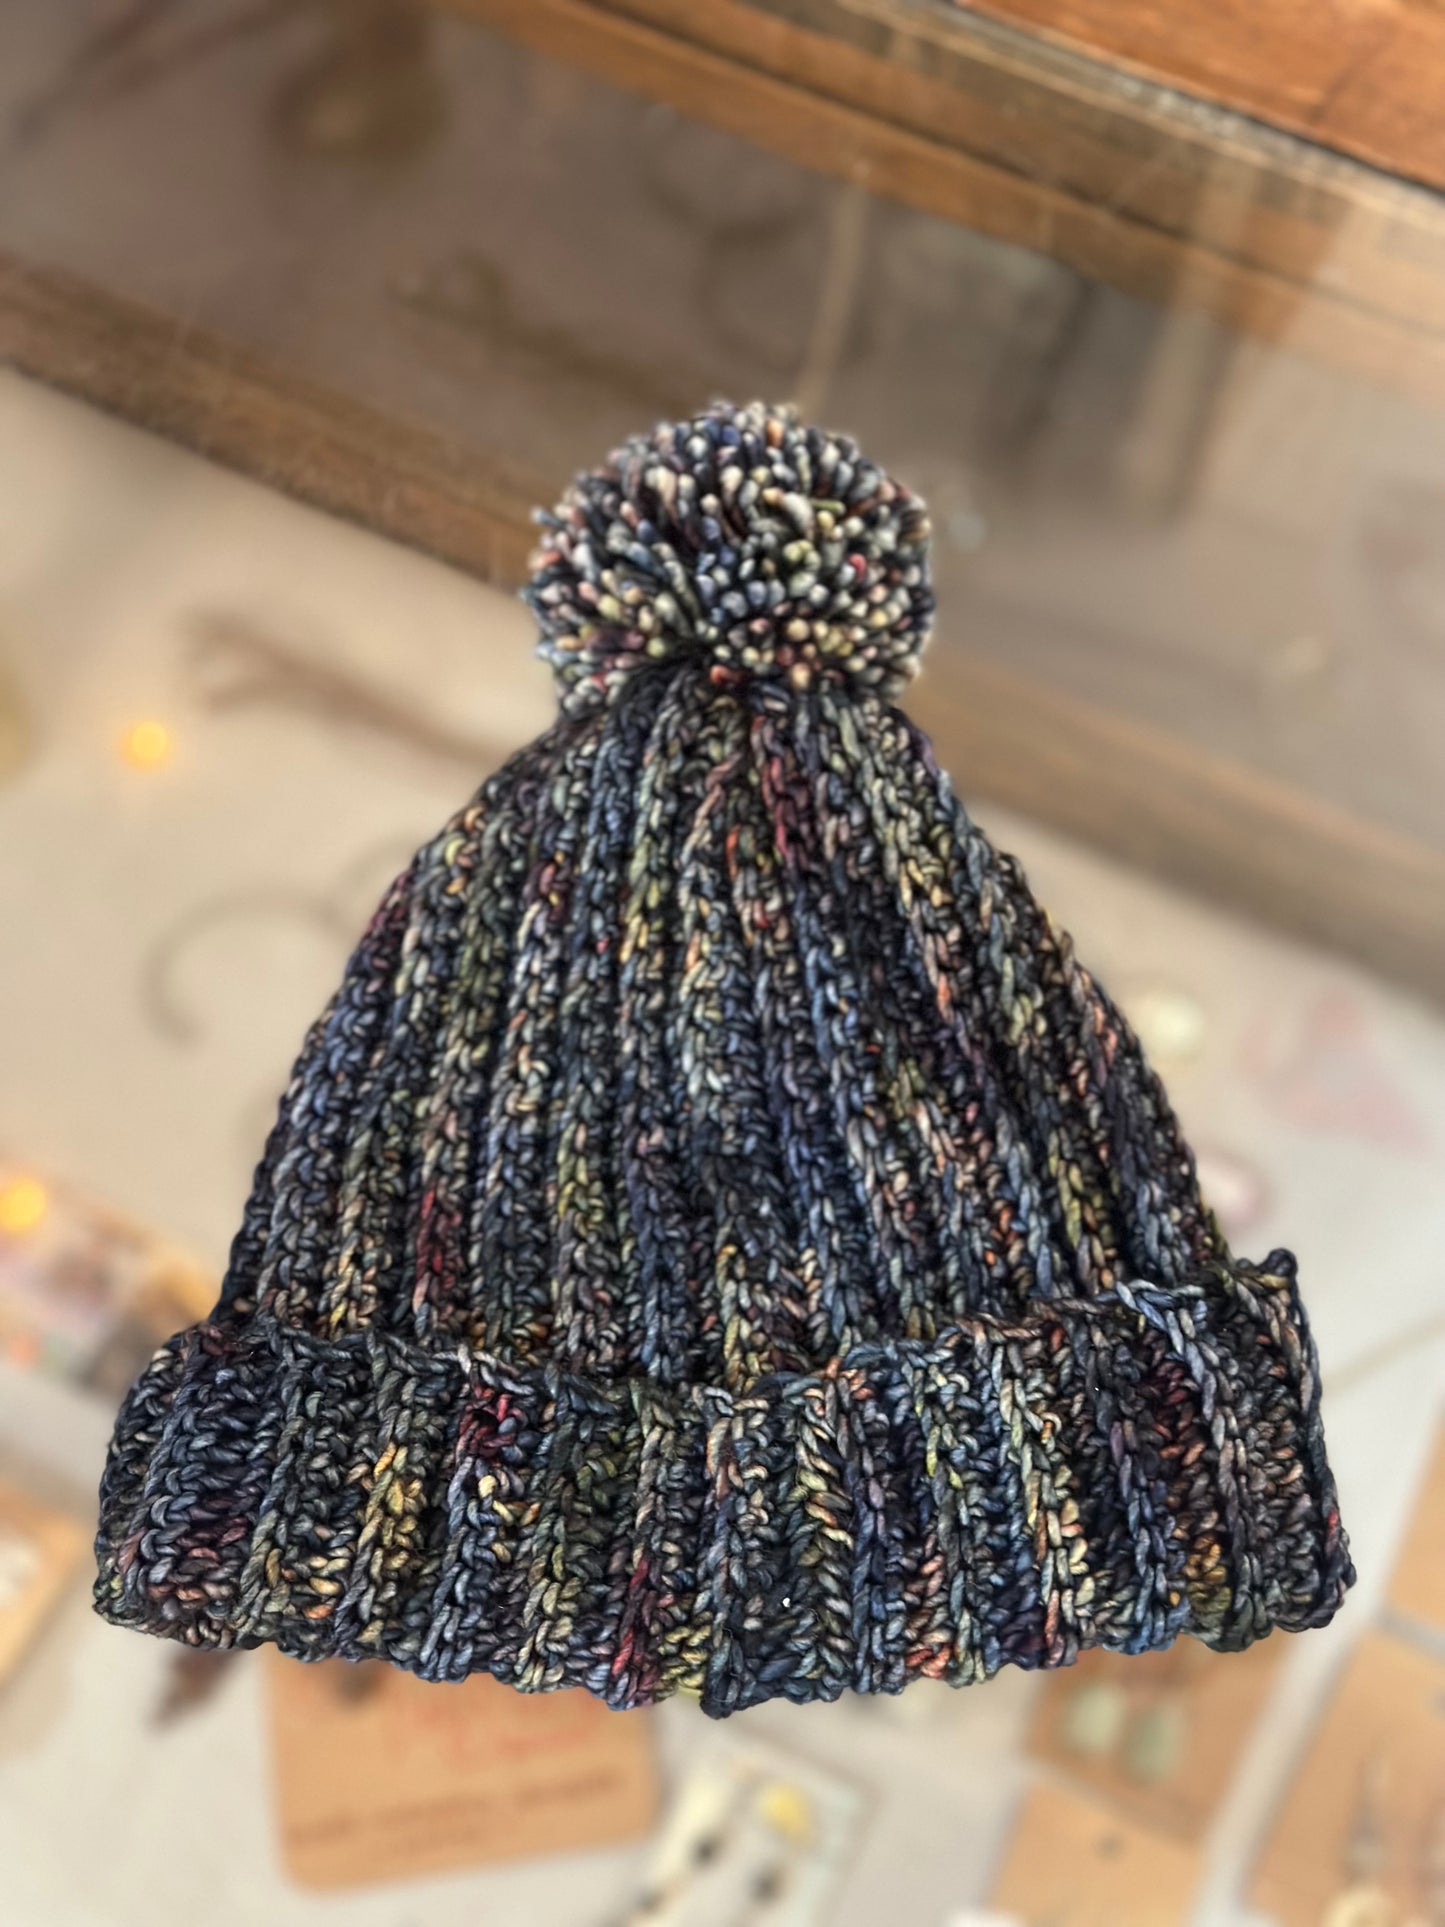 Handdyed Navy Blue Hand Crochet Hat